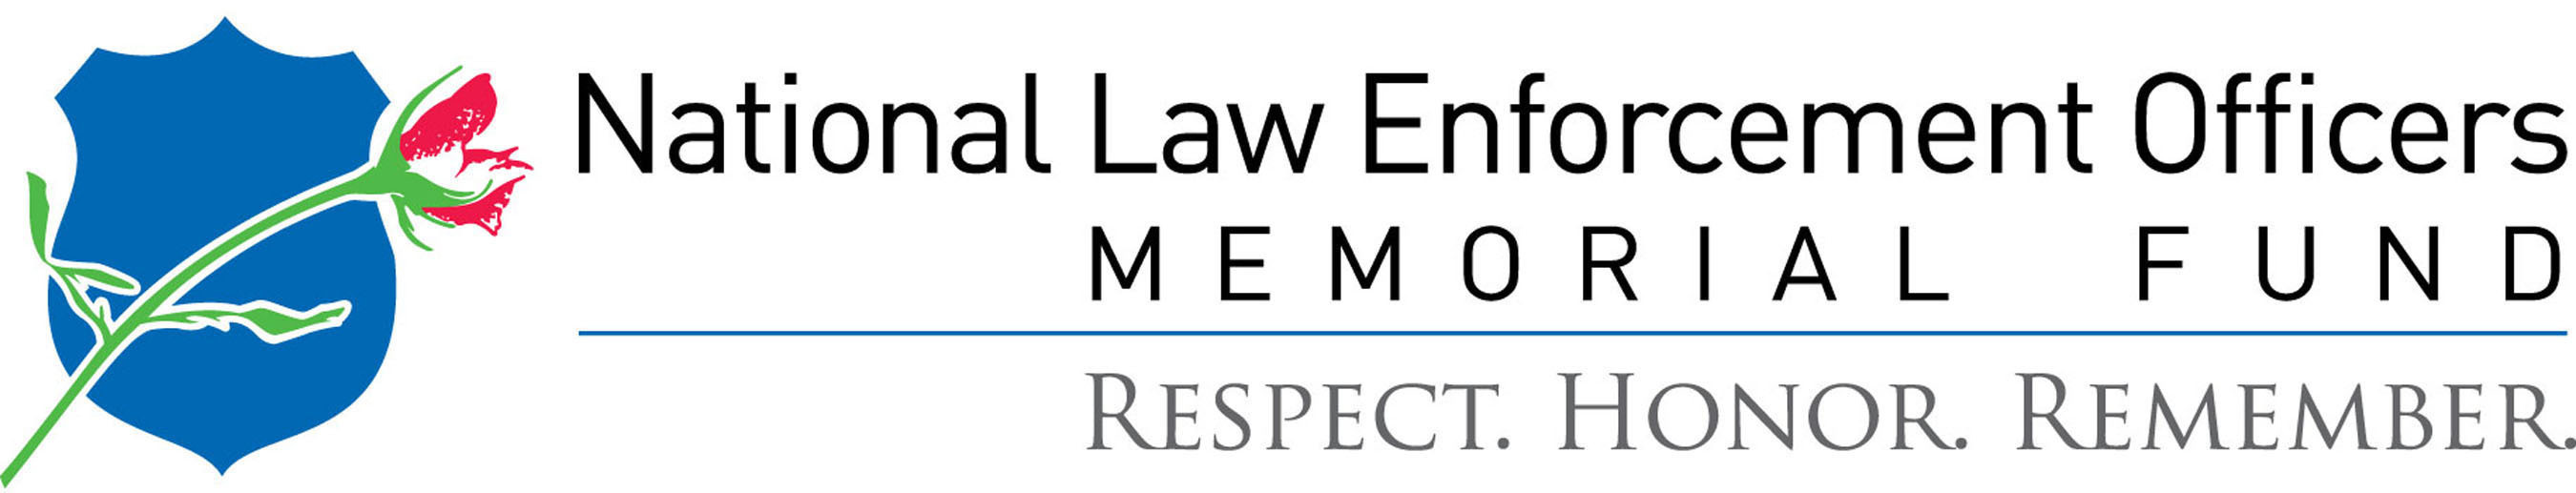 National Law Enforcement Officers Memorial Fund logo